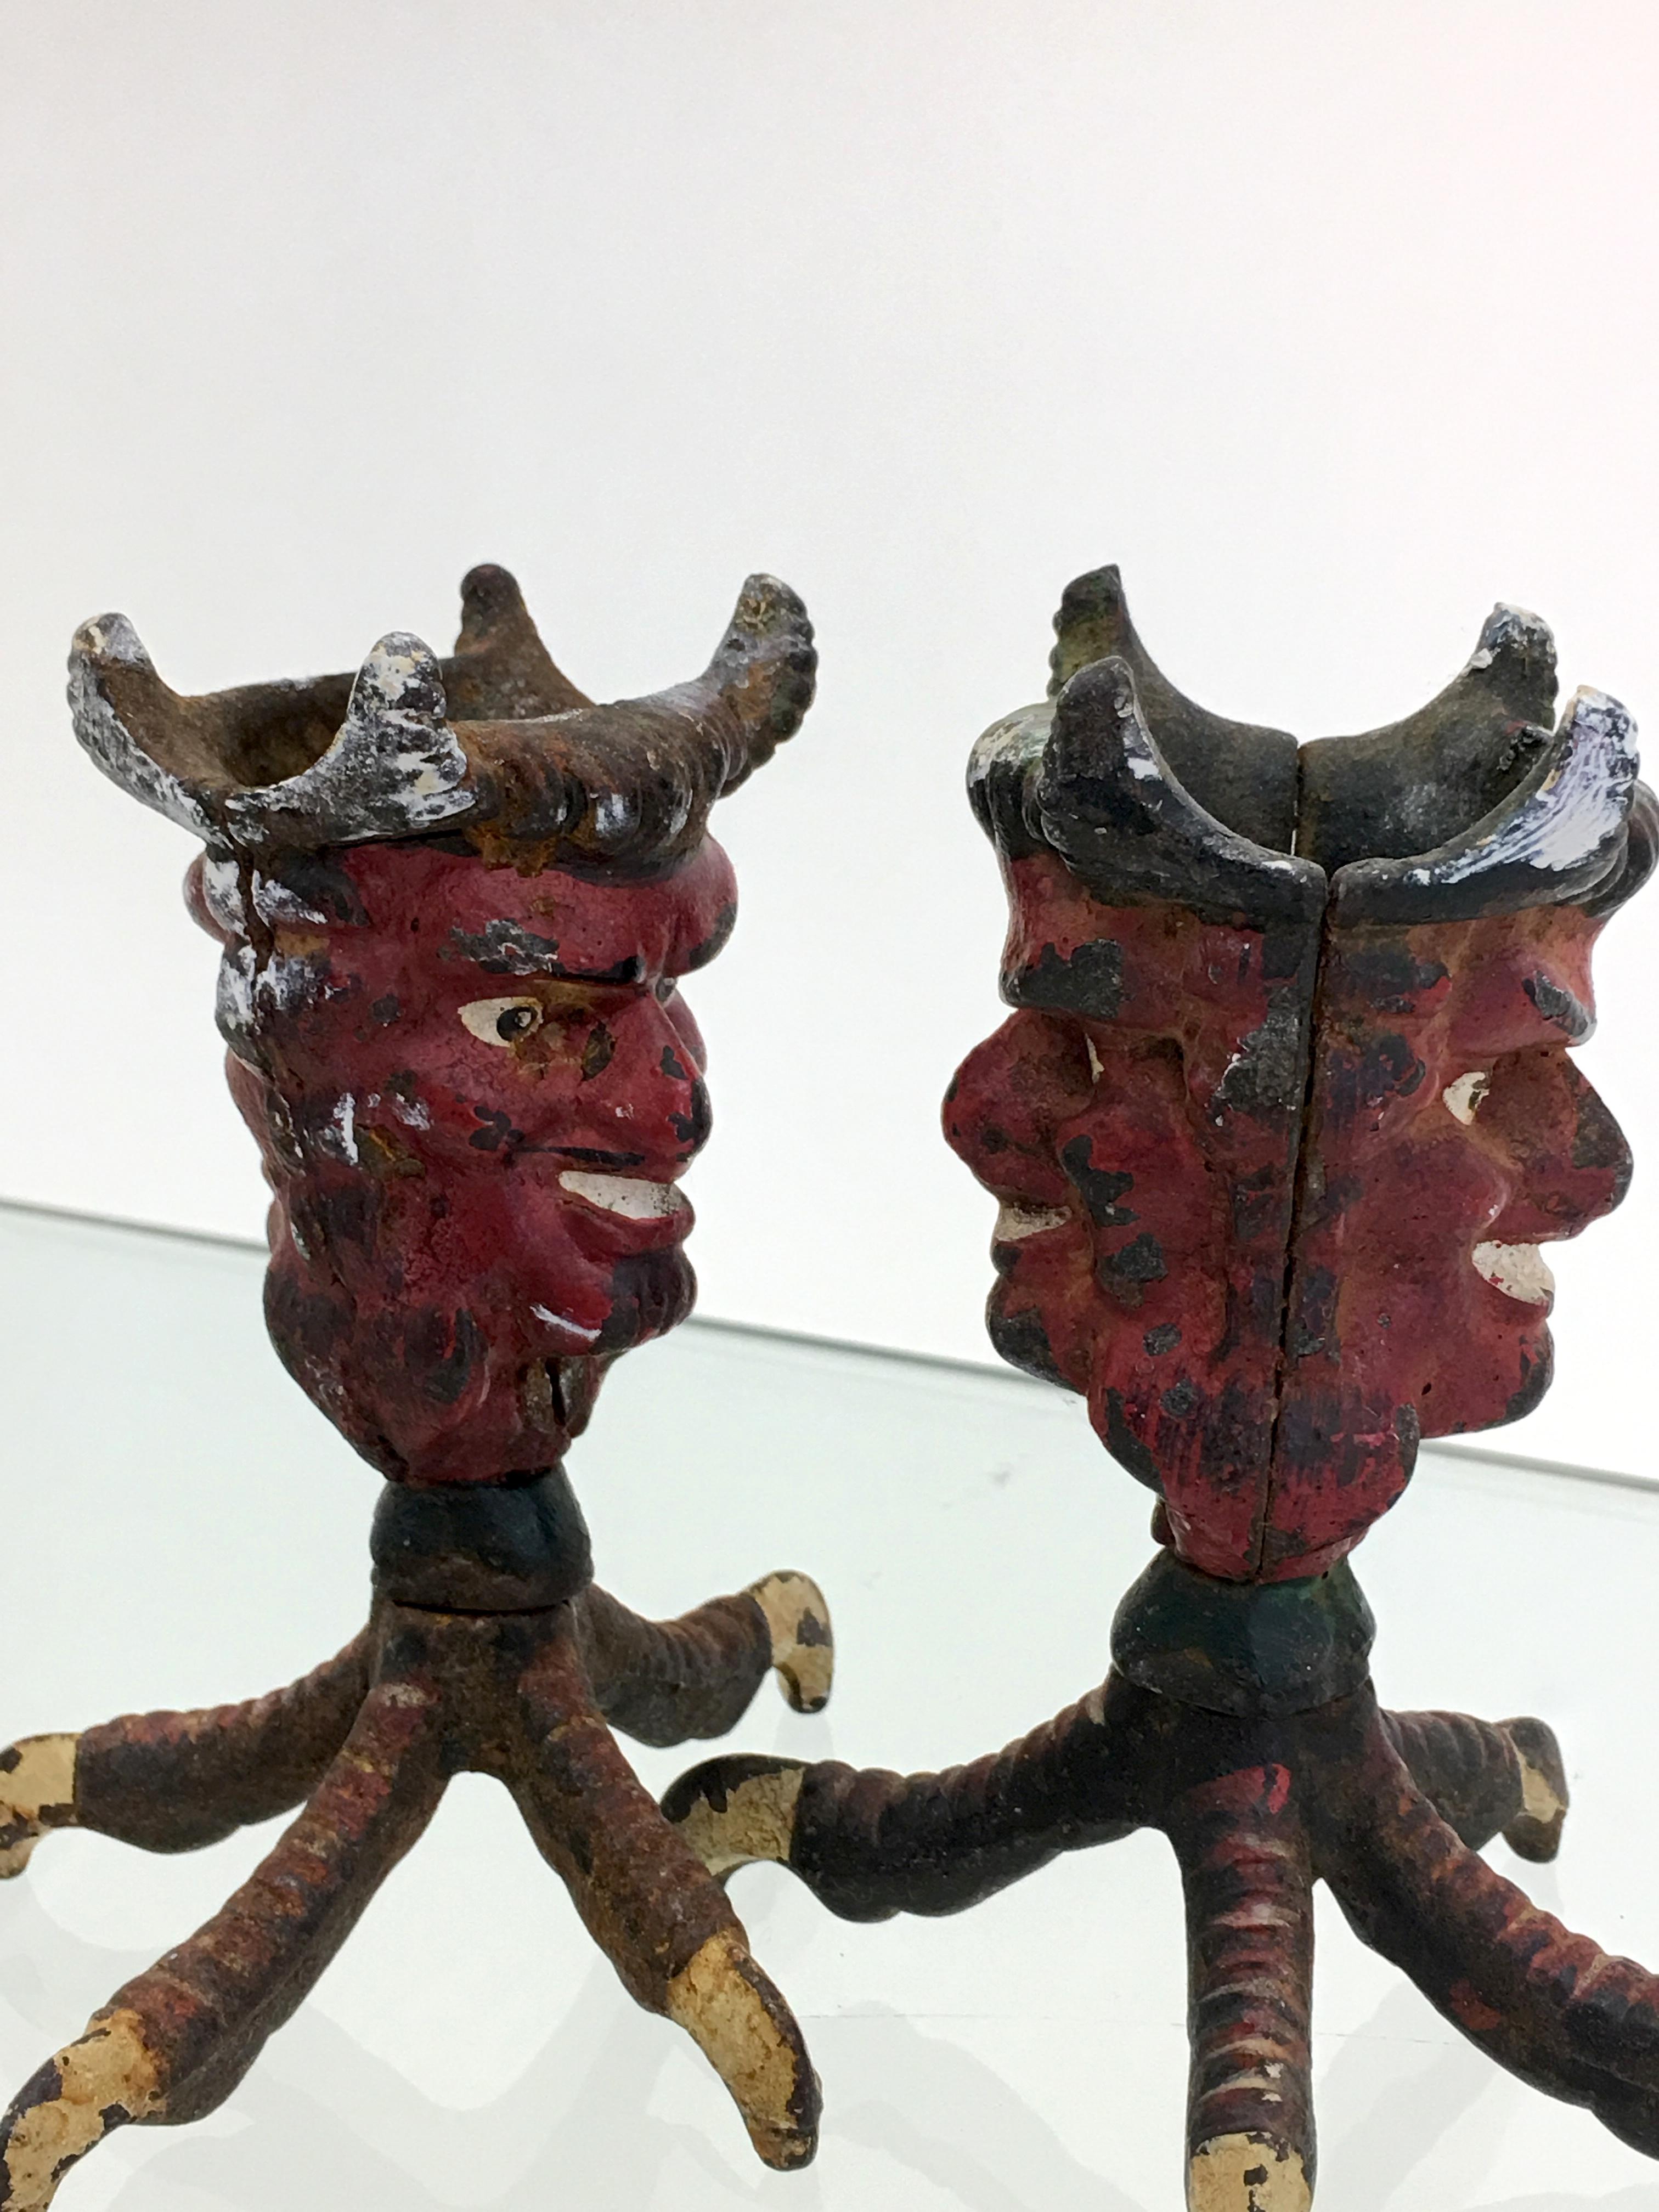 Pair of cast iron Devil Head Candlestick holders.
Measure 4.5